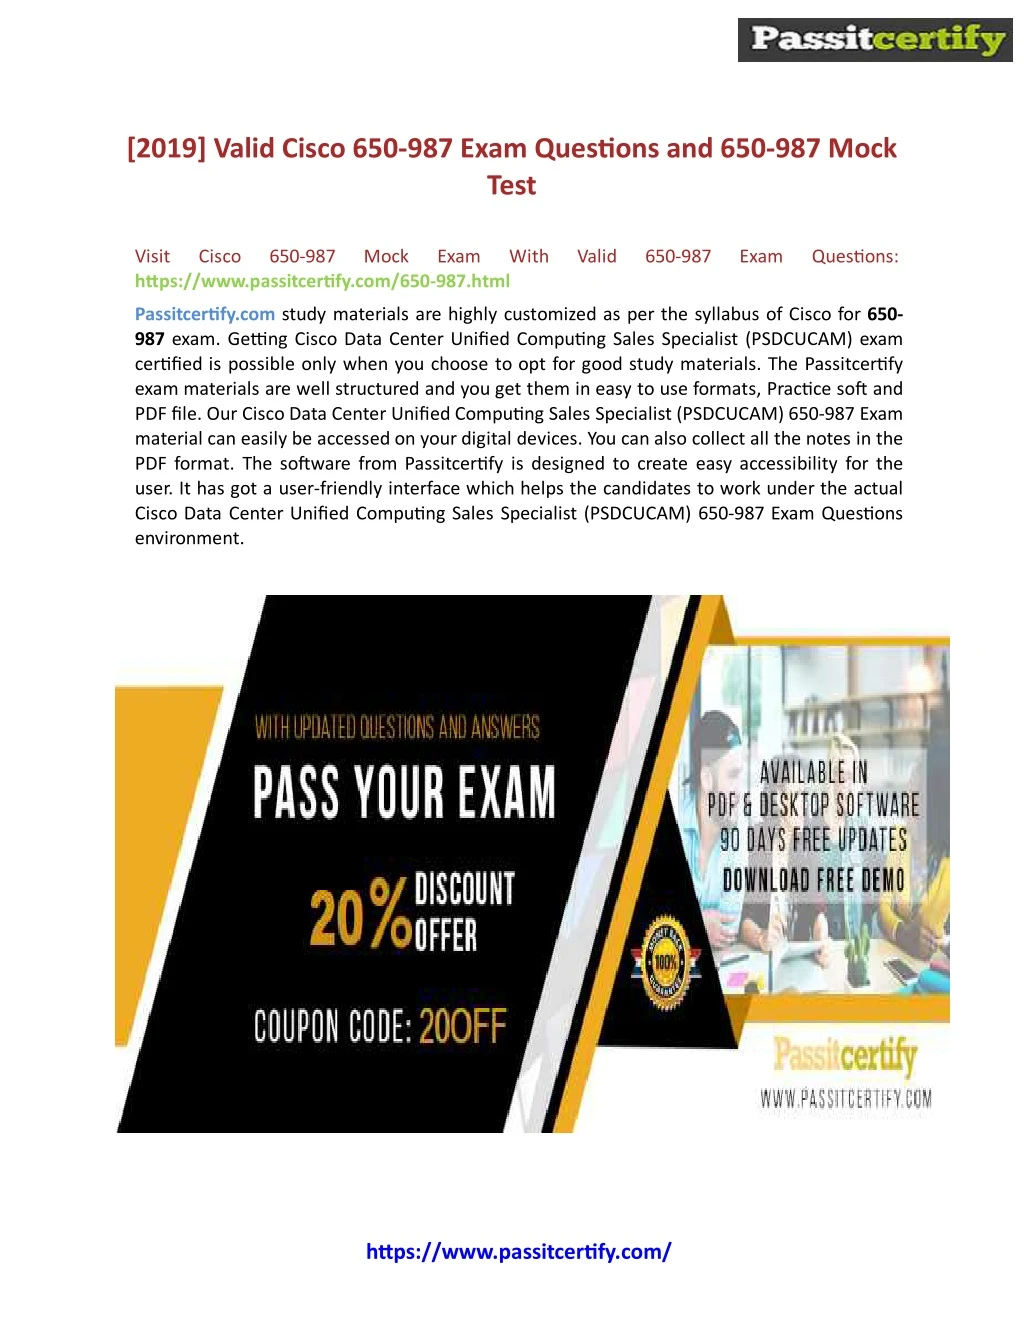 2019 valid cisco 650 987 exam questions